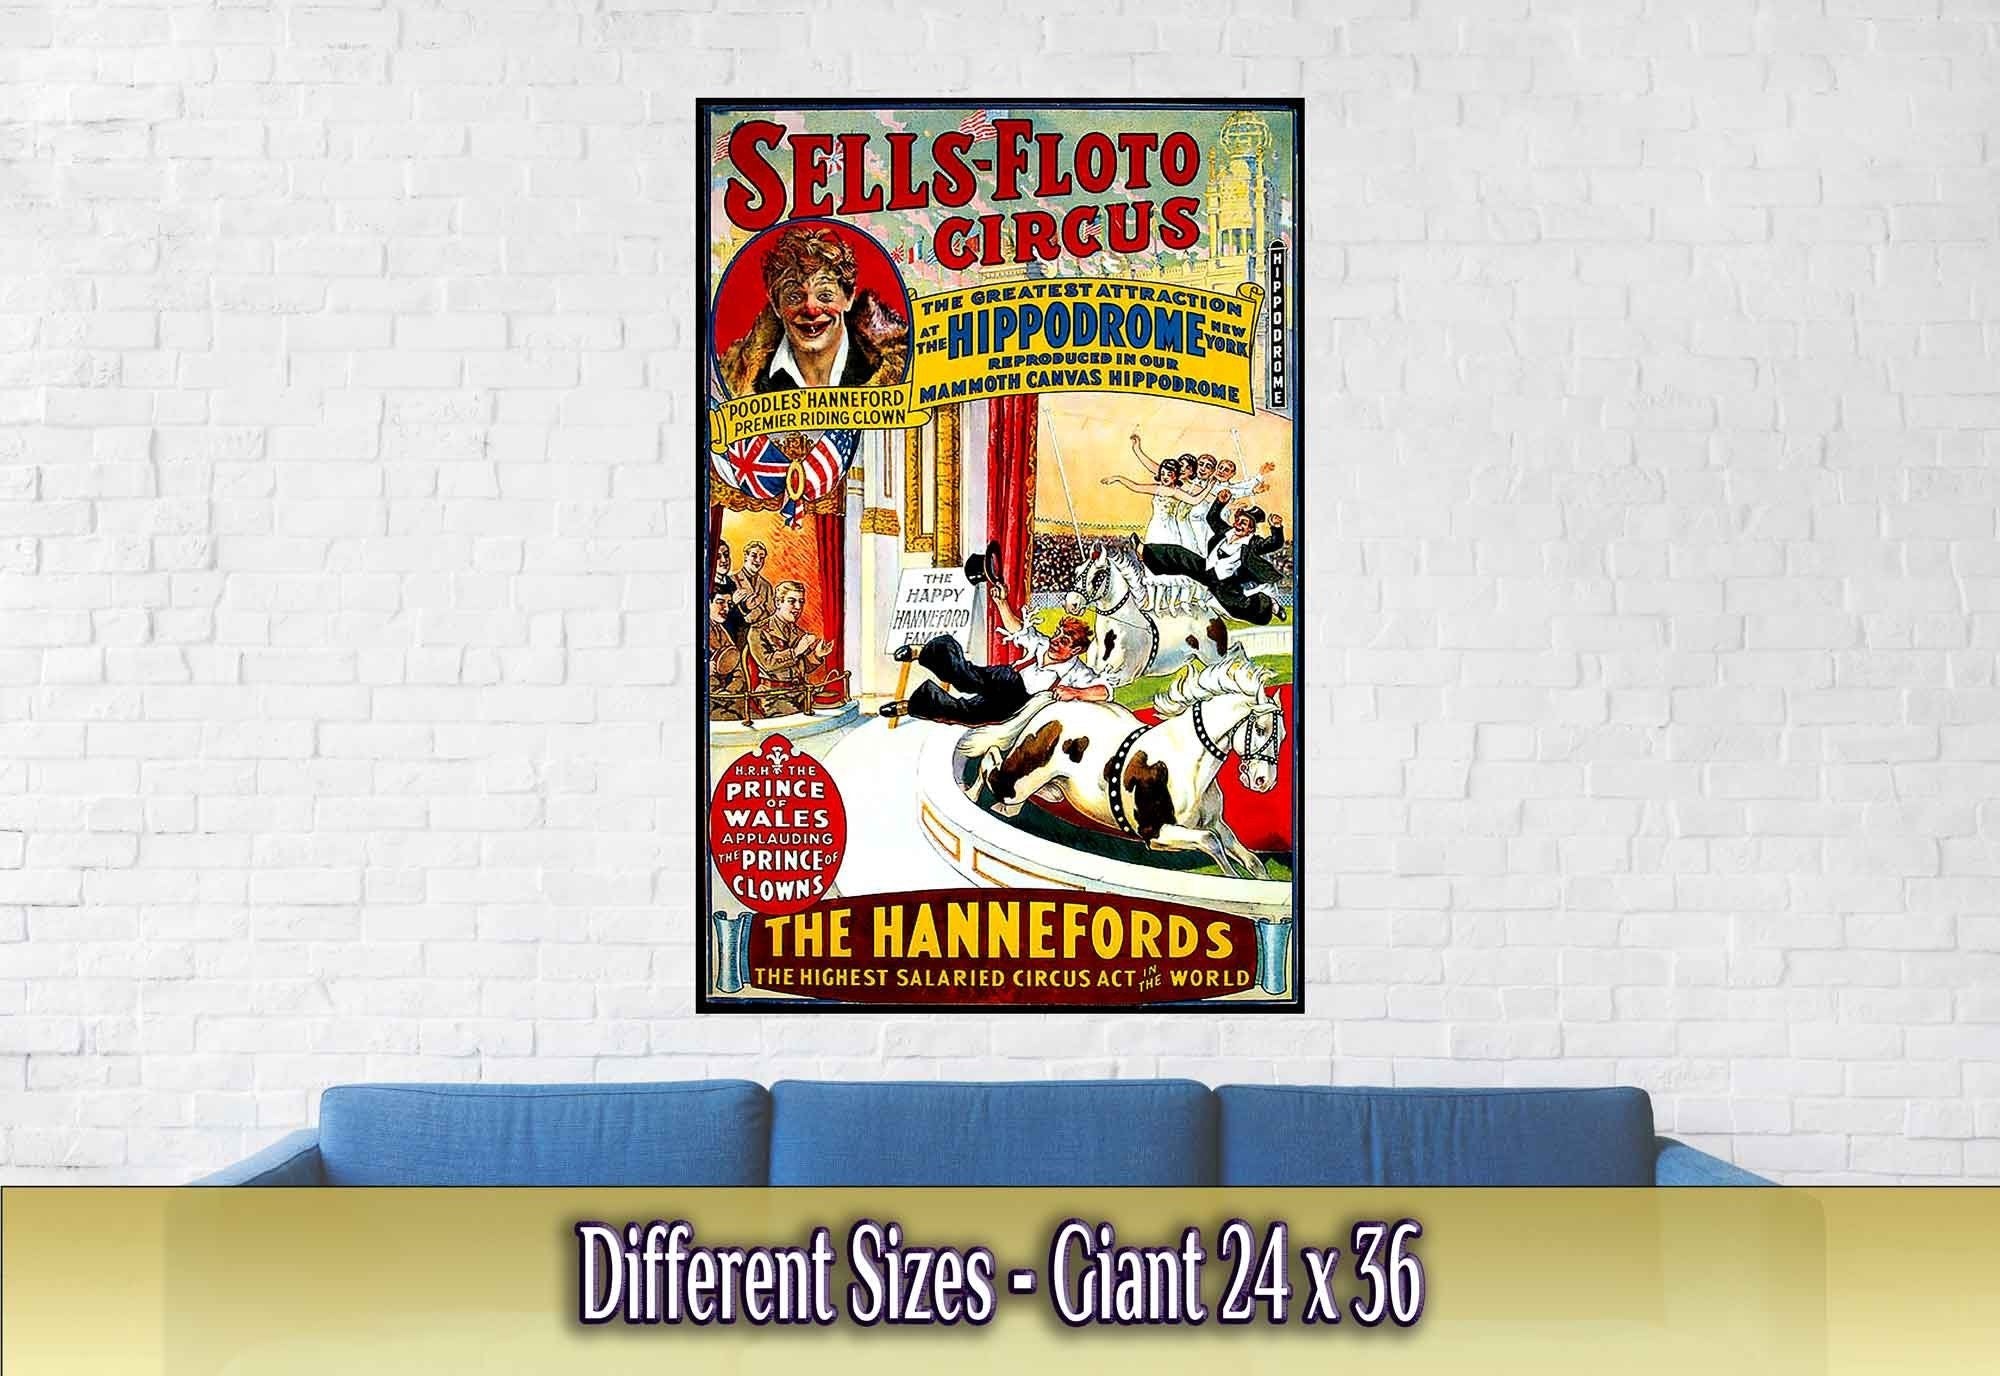 Vintage Circus Poster, Sells Floto Circus, Hippodrome New York Circa 1900. - WallArtPrints4U